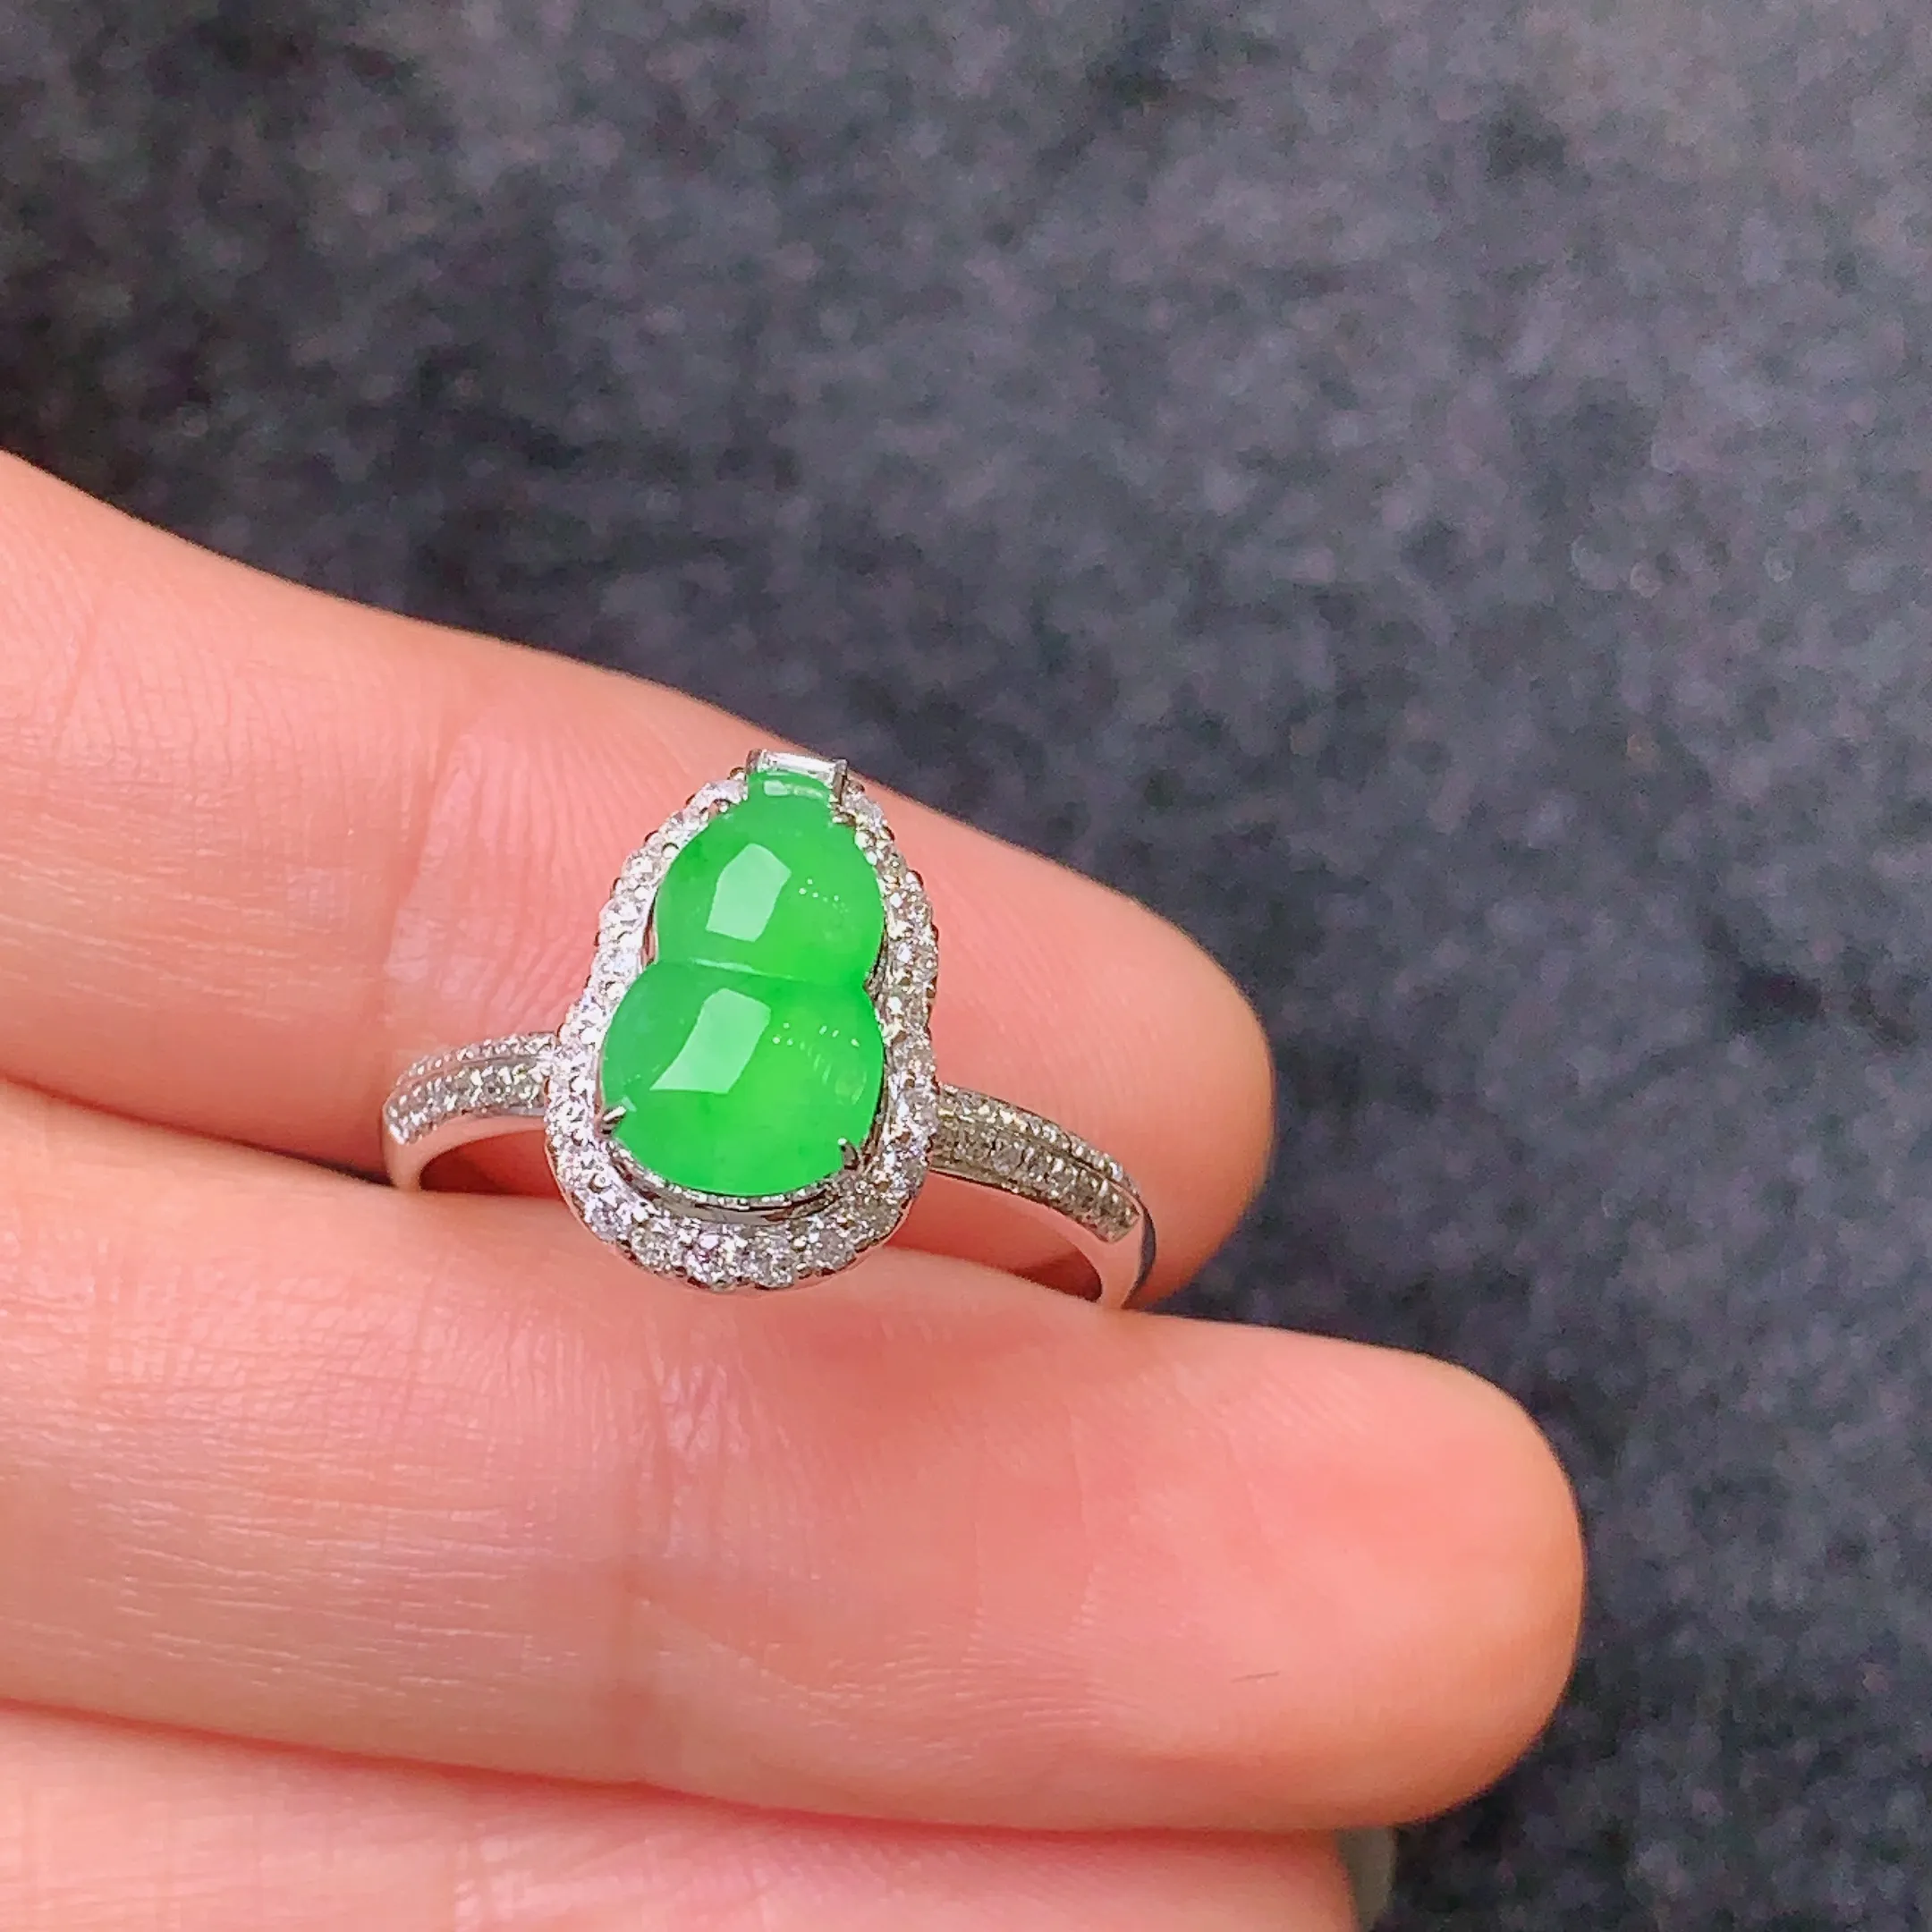 18k金钻镶嵌满绿葫芦戒指 玉质细腻 款式新颖时尚高贵优雅 圈口13.5整体尺寸12.7*8.9*8.8